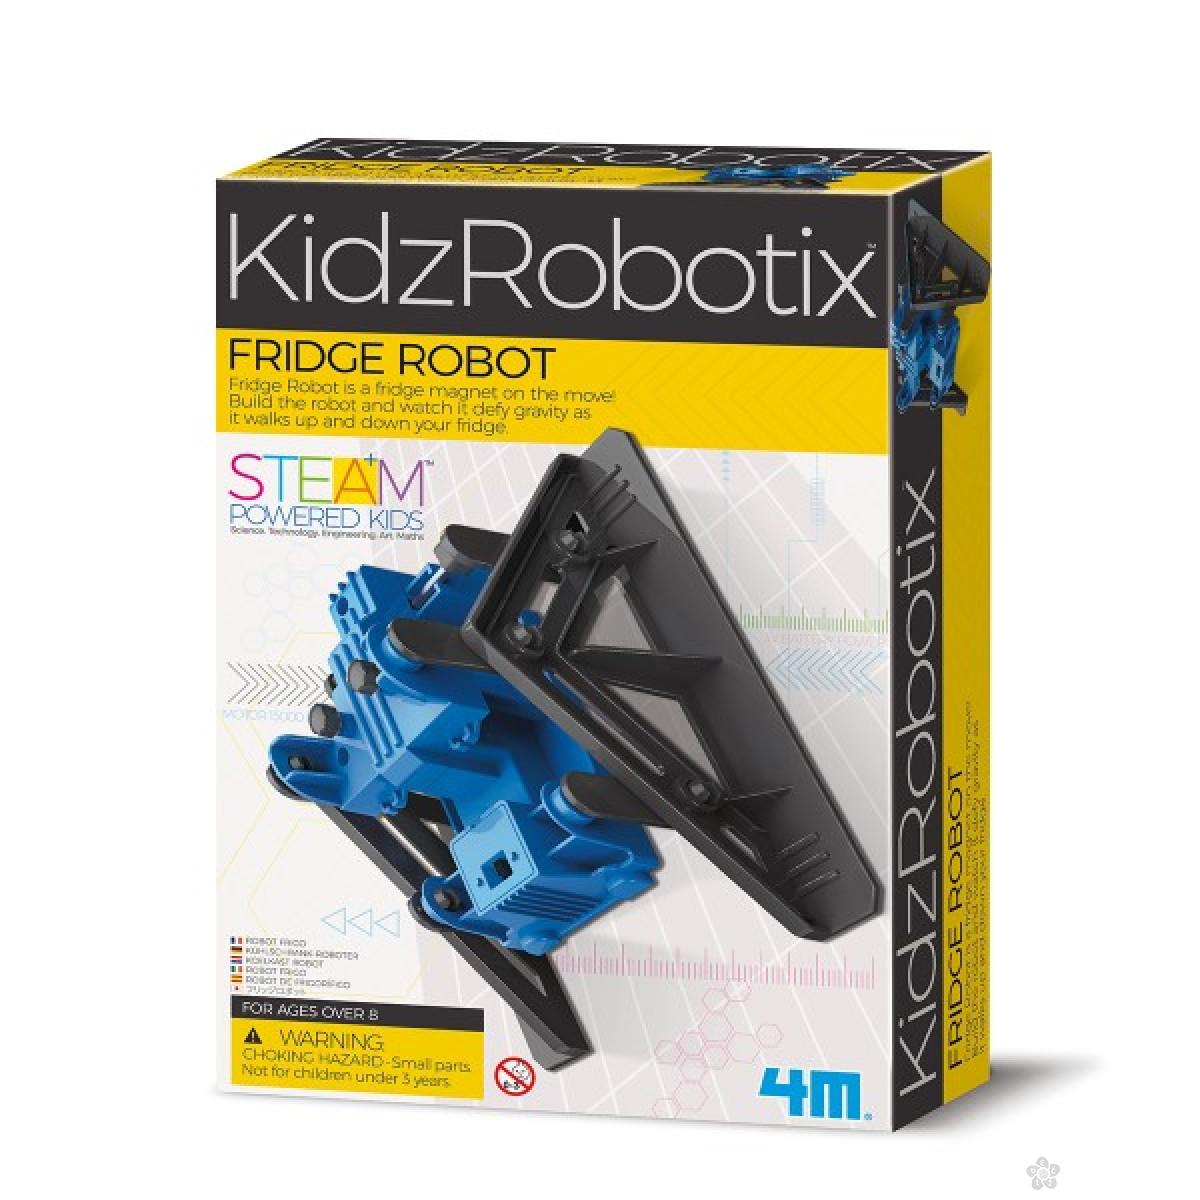 Kidzrobotix-Fridge Robot, 4M03391 